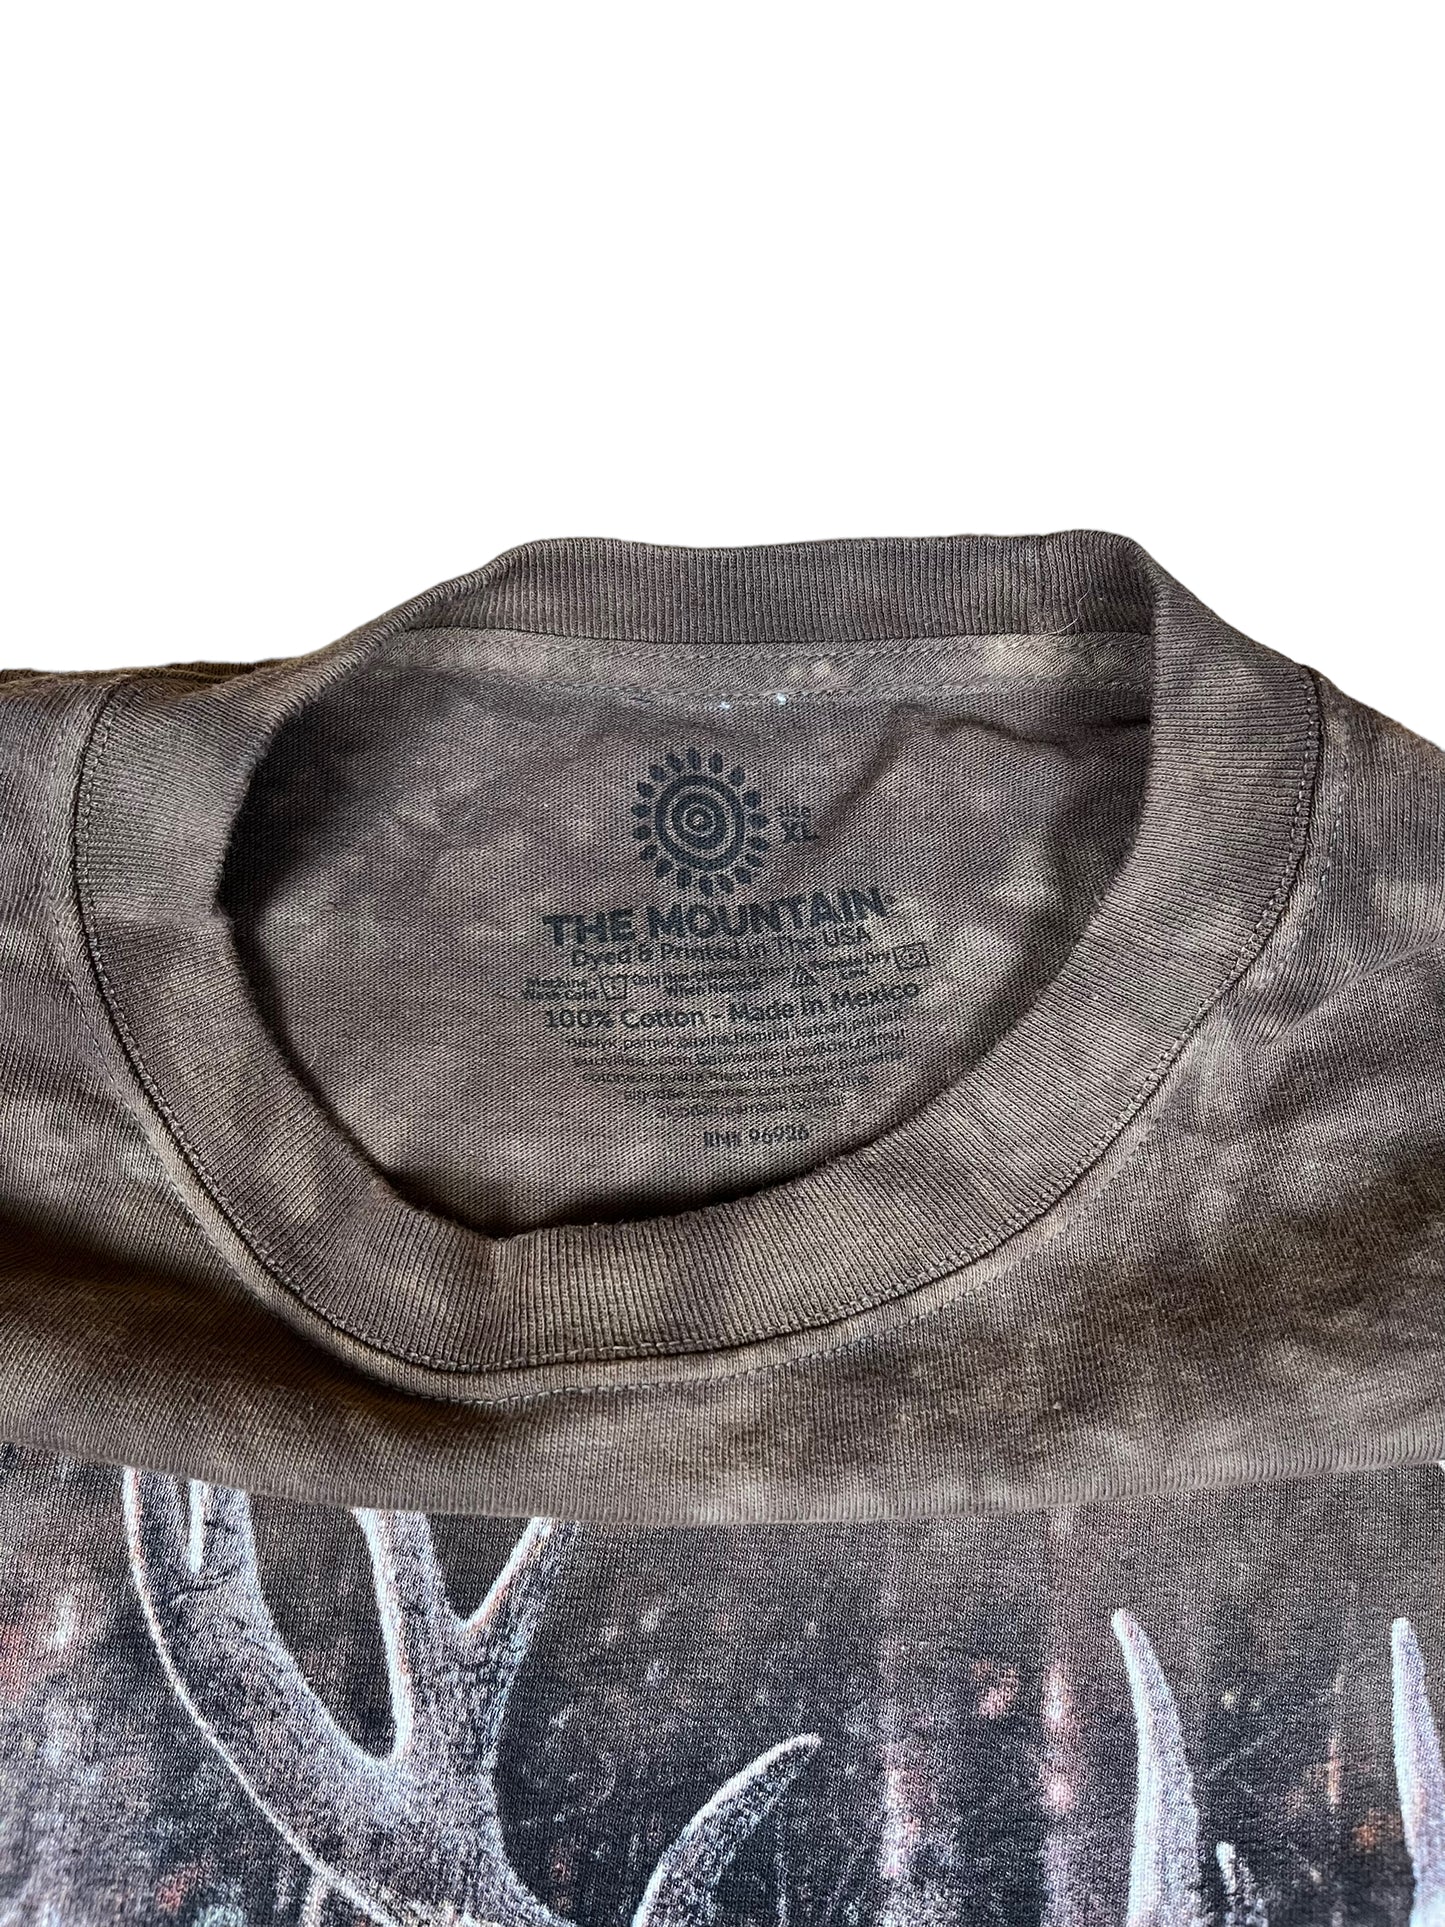 Vintage The Mountain Deer T Shirt - XL